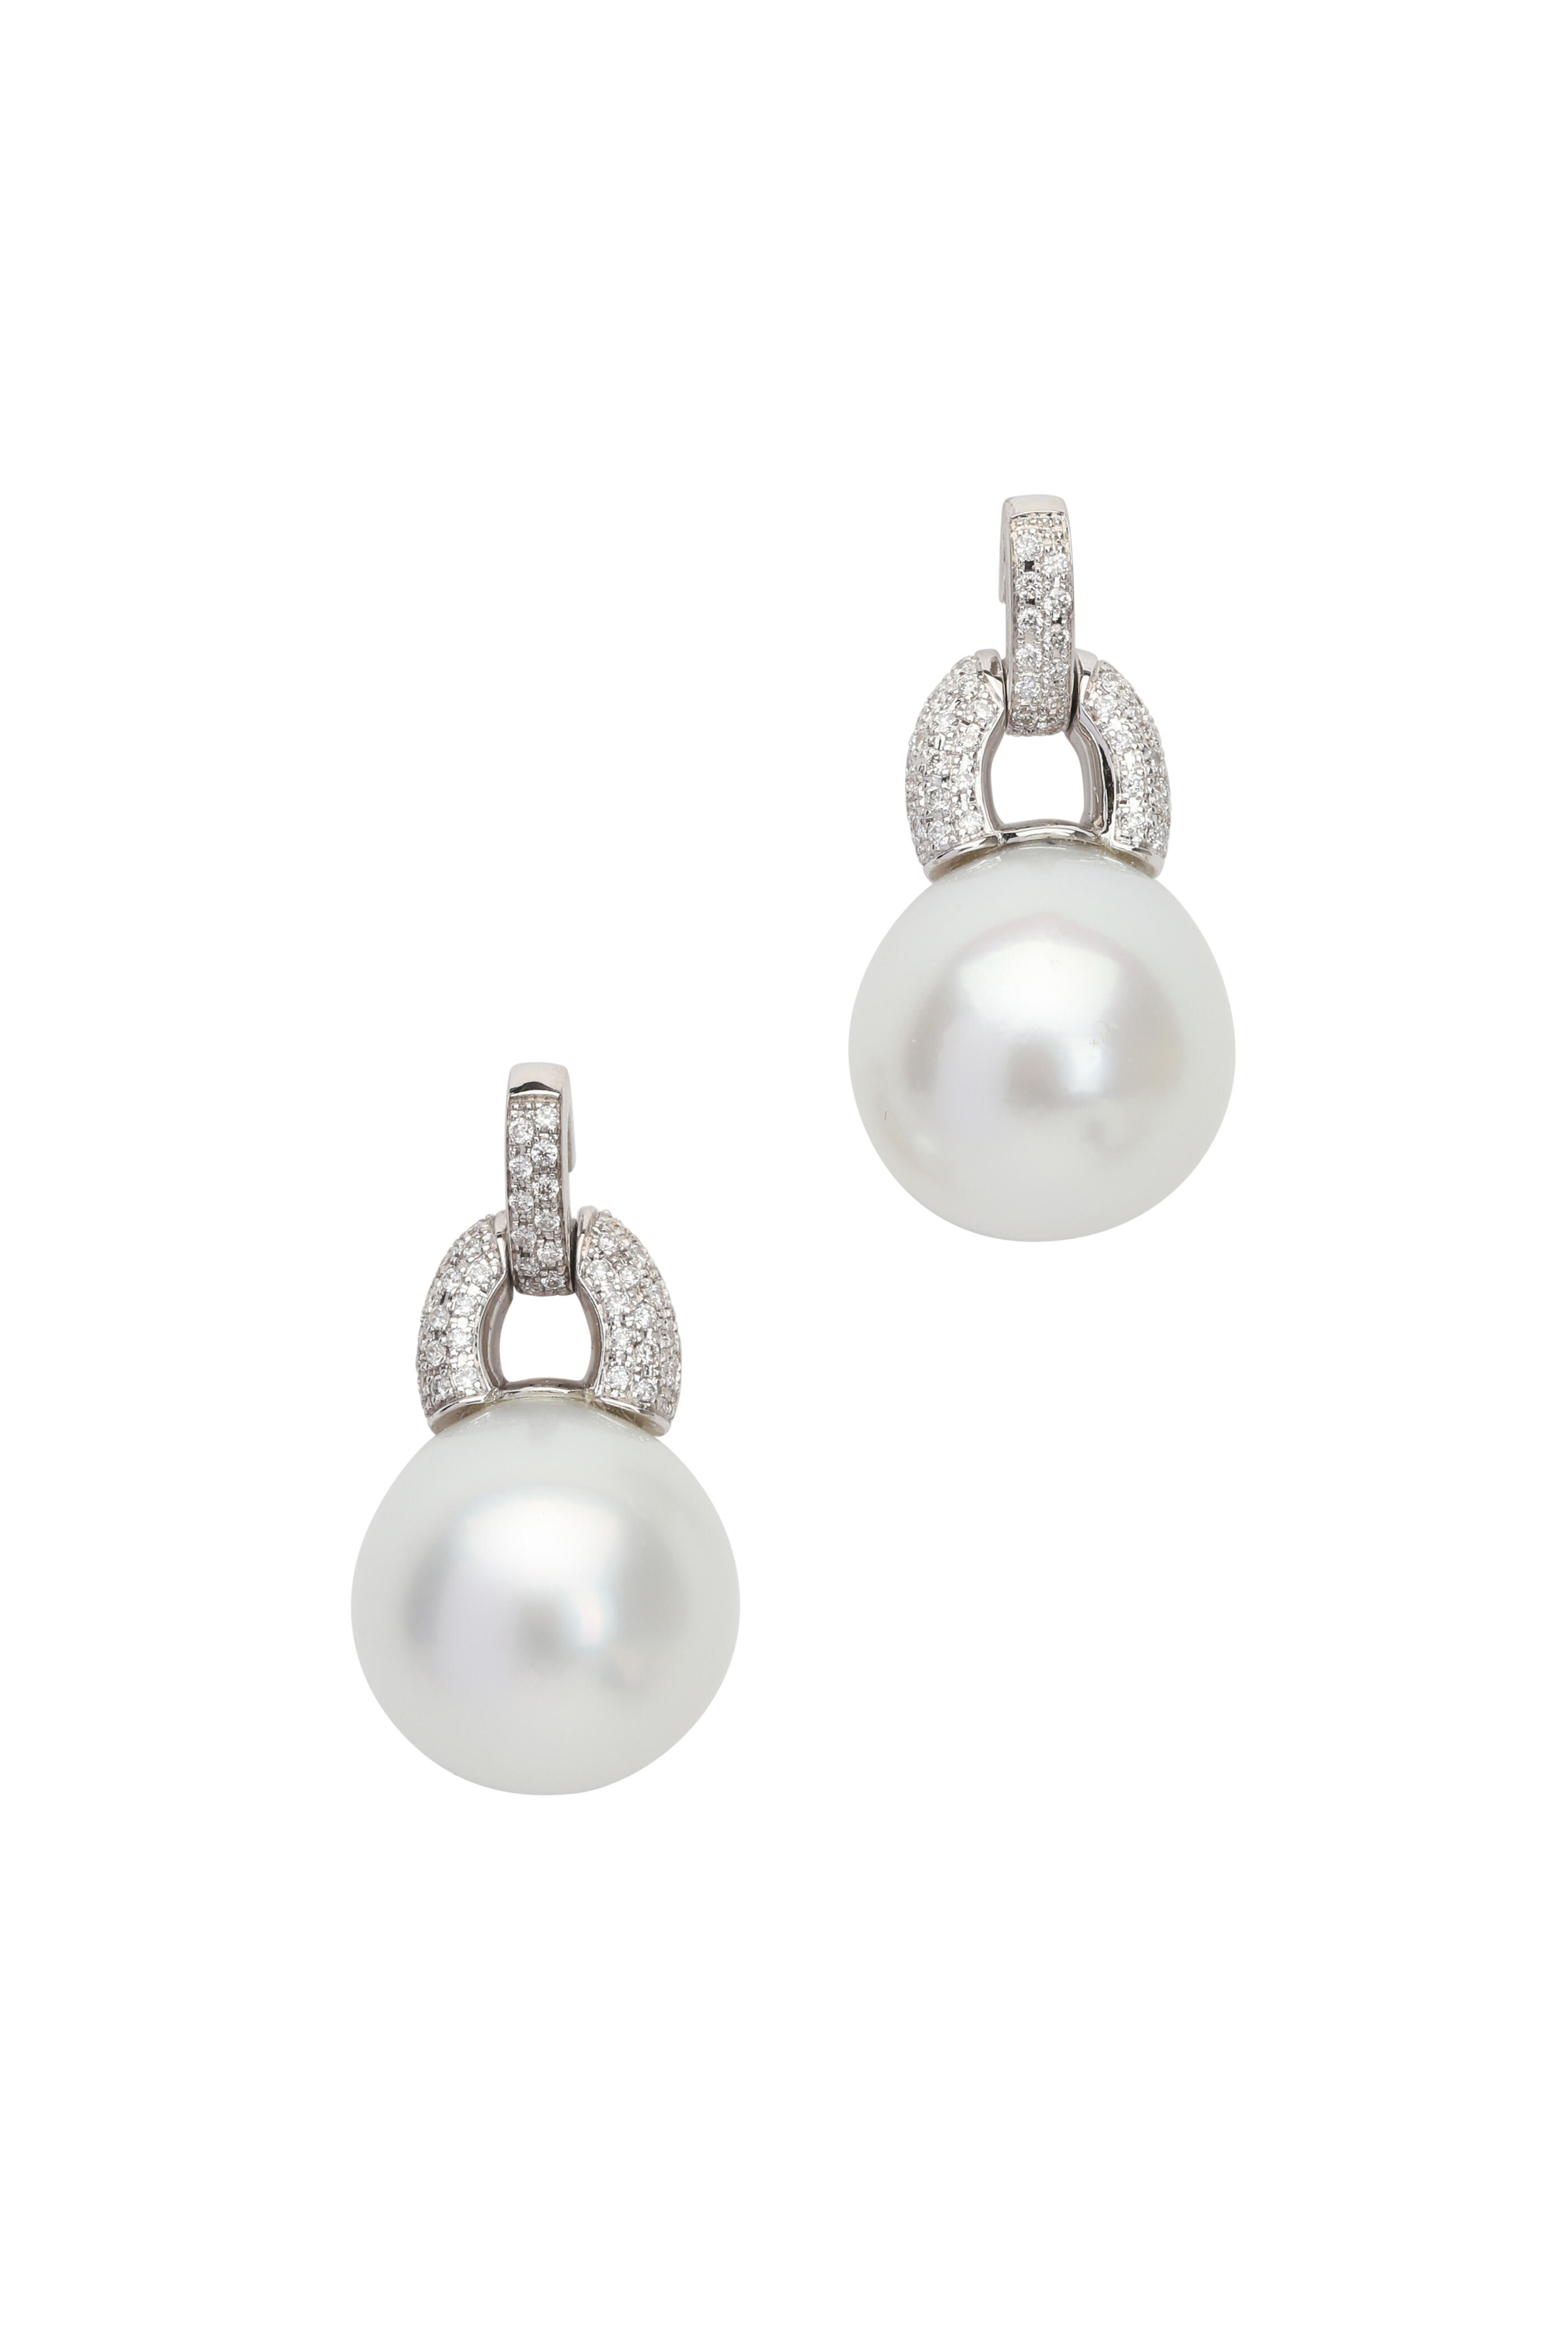 Frank Ancona - 18K White Gold South Sea Pearl & Diamond Earrings